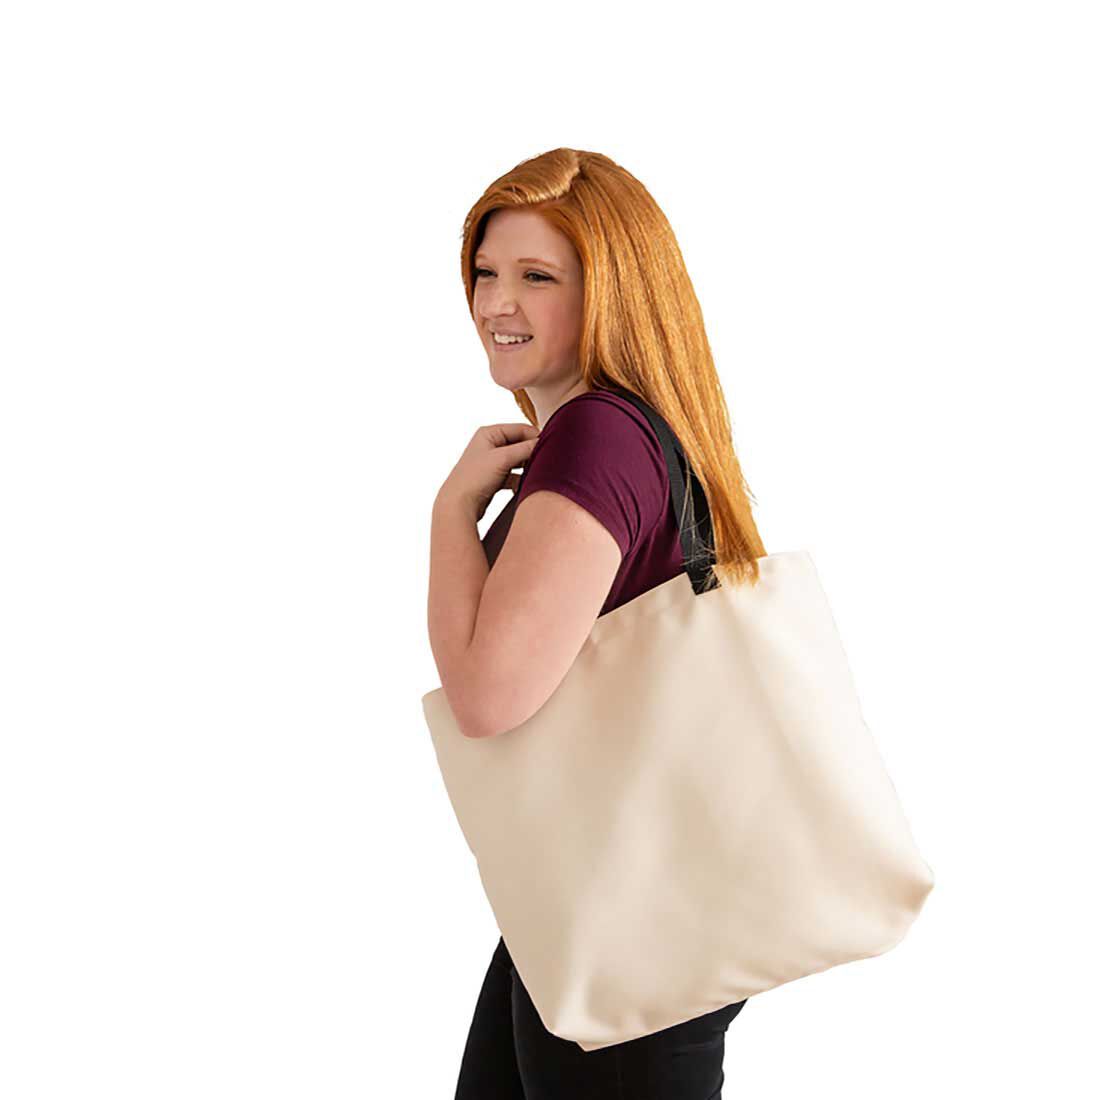 Cricut Blank Tote Bag